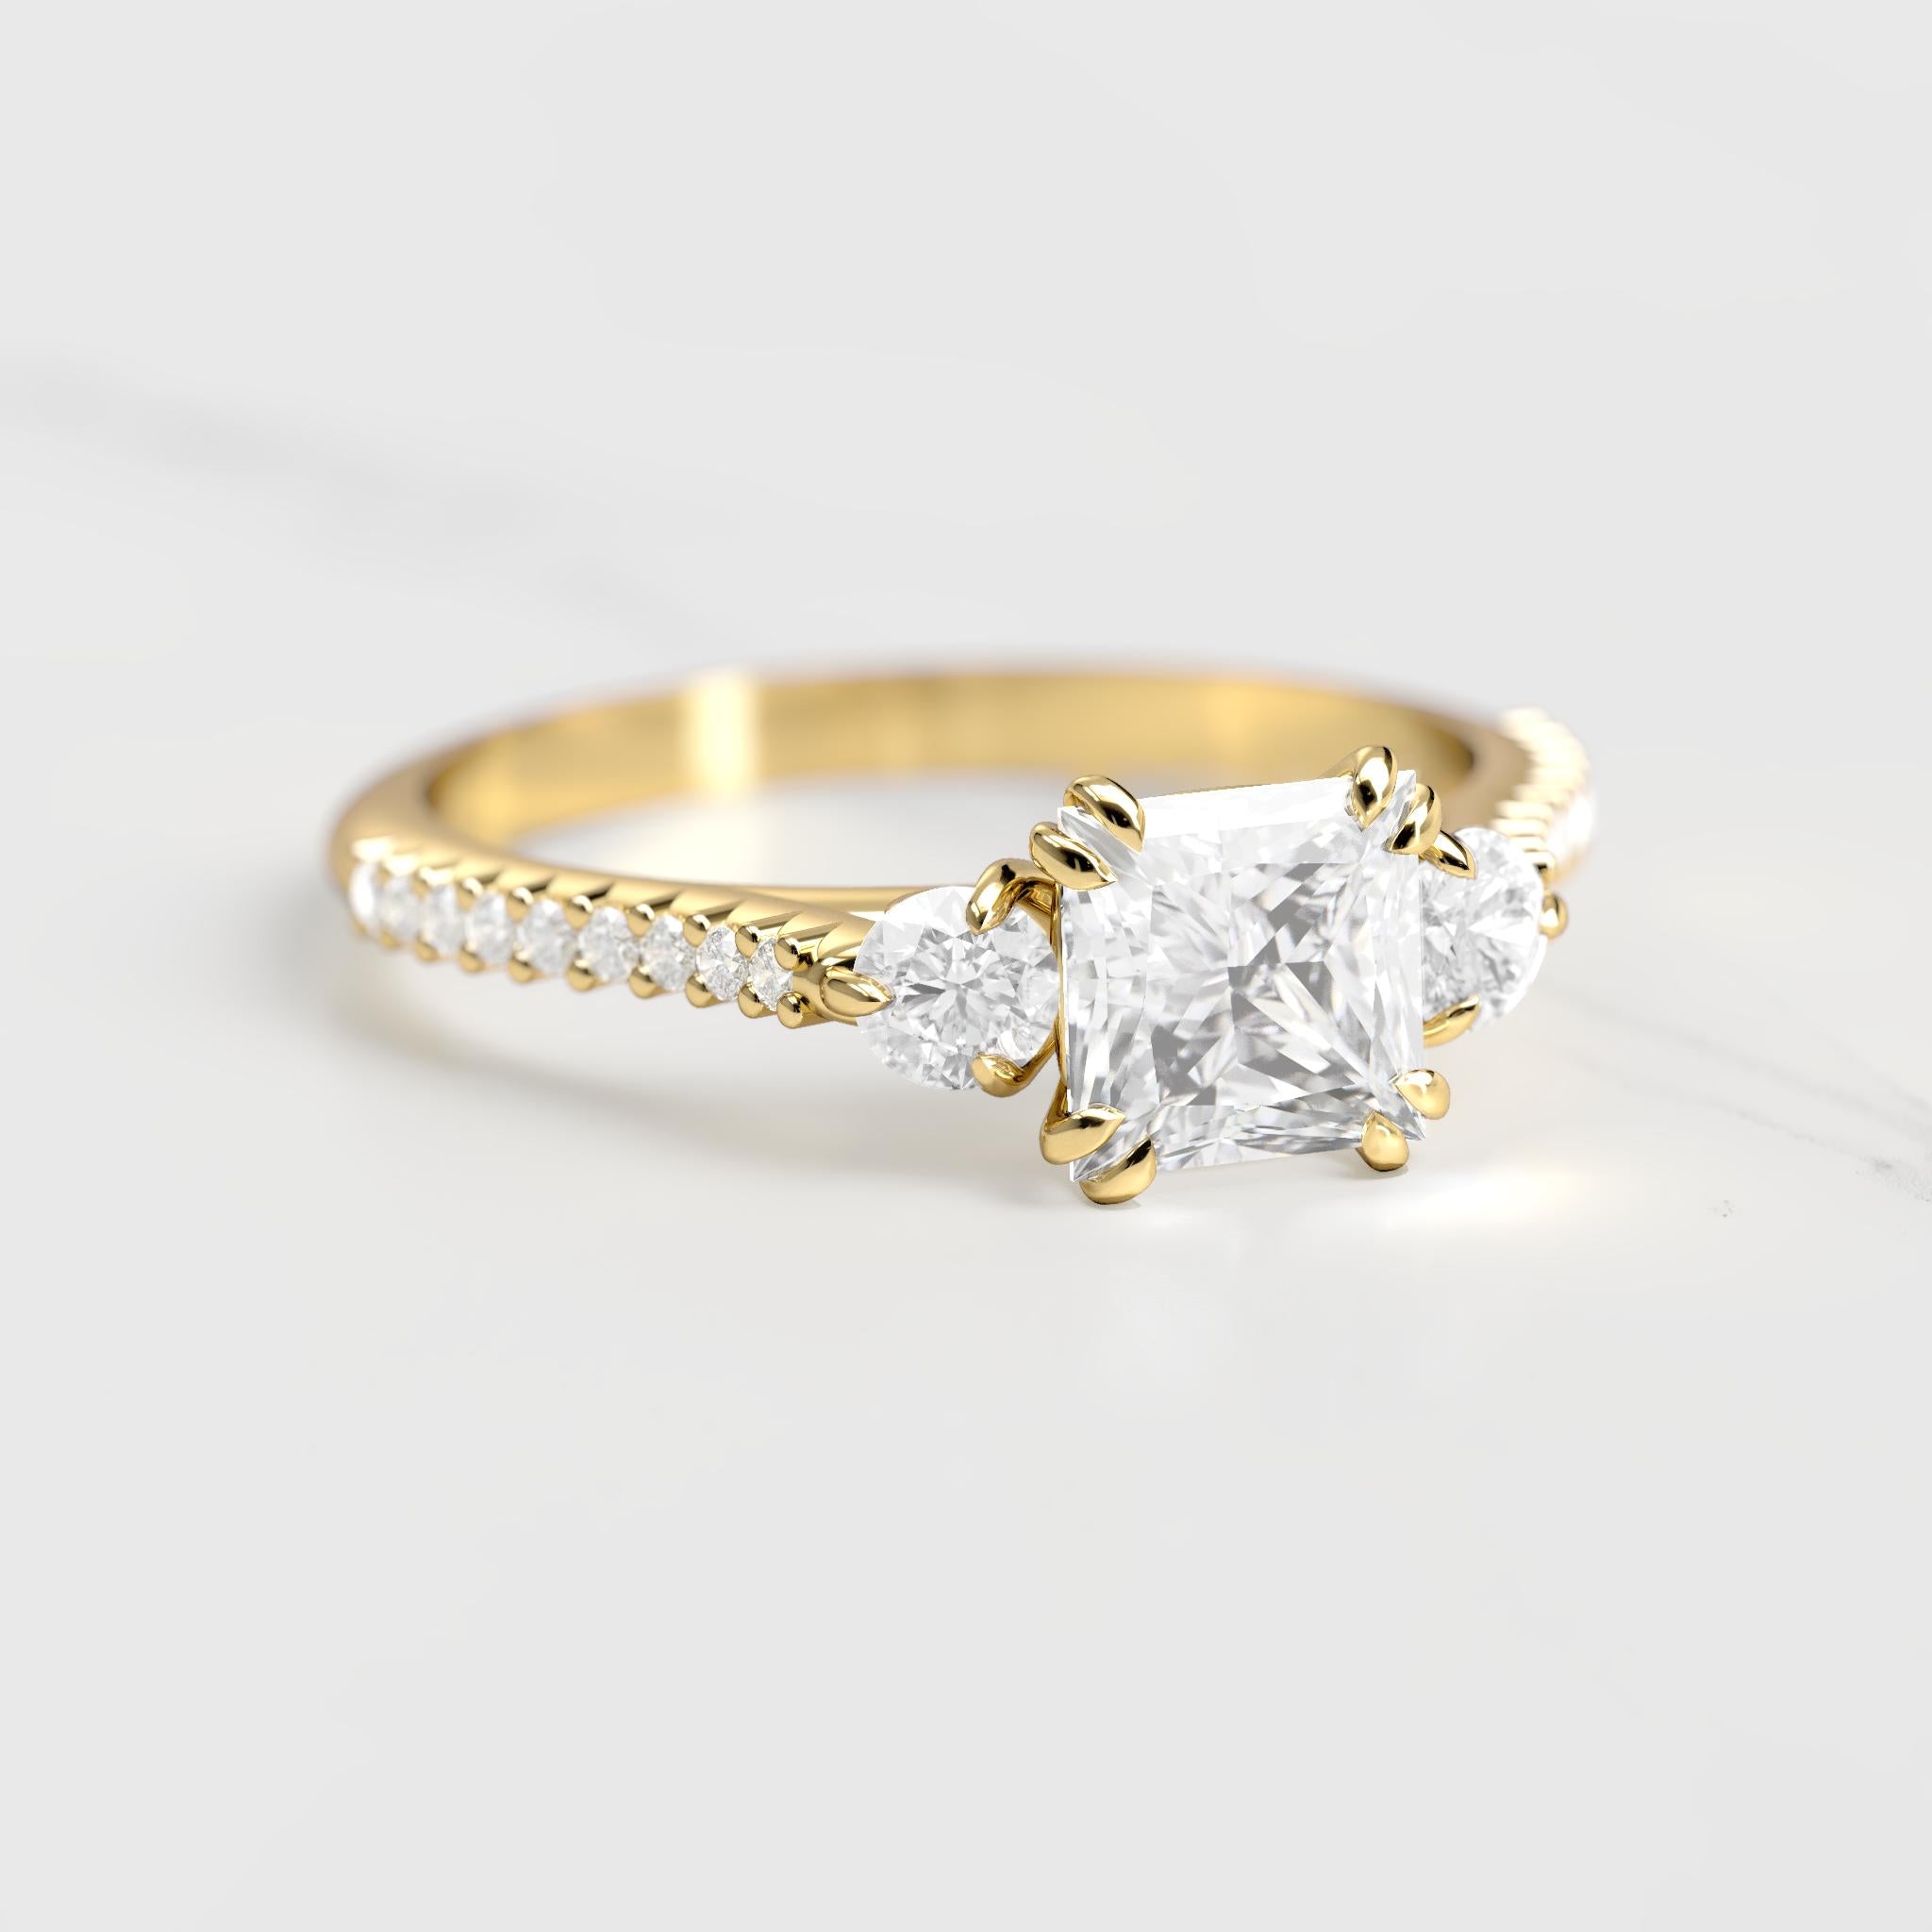 PRINCESS HALF PAVE DIAMOND RING WITH ACCENT STONES - 14k white gold / 1.50ct / natural diamond